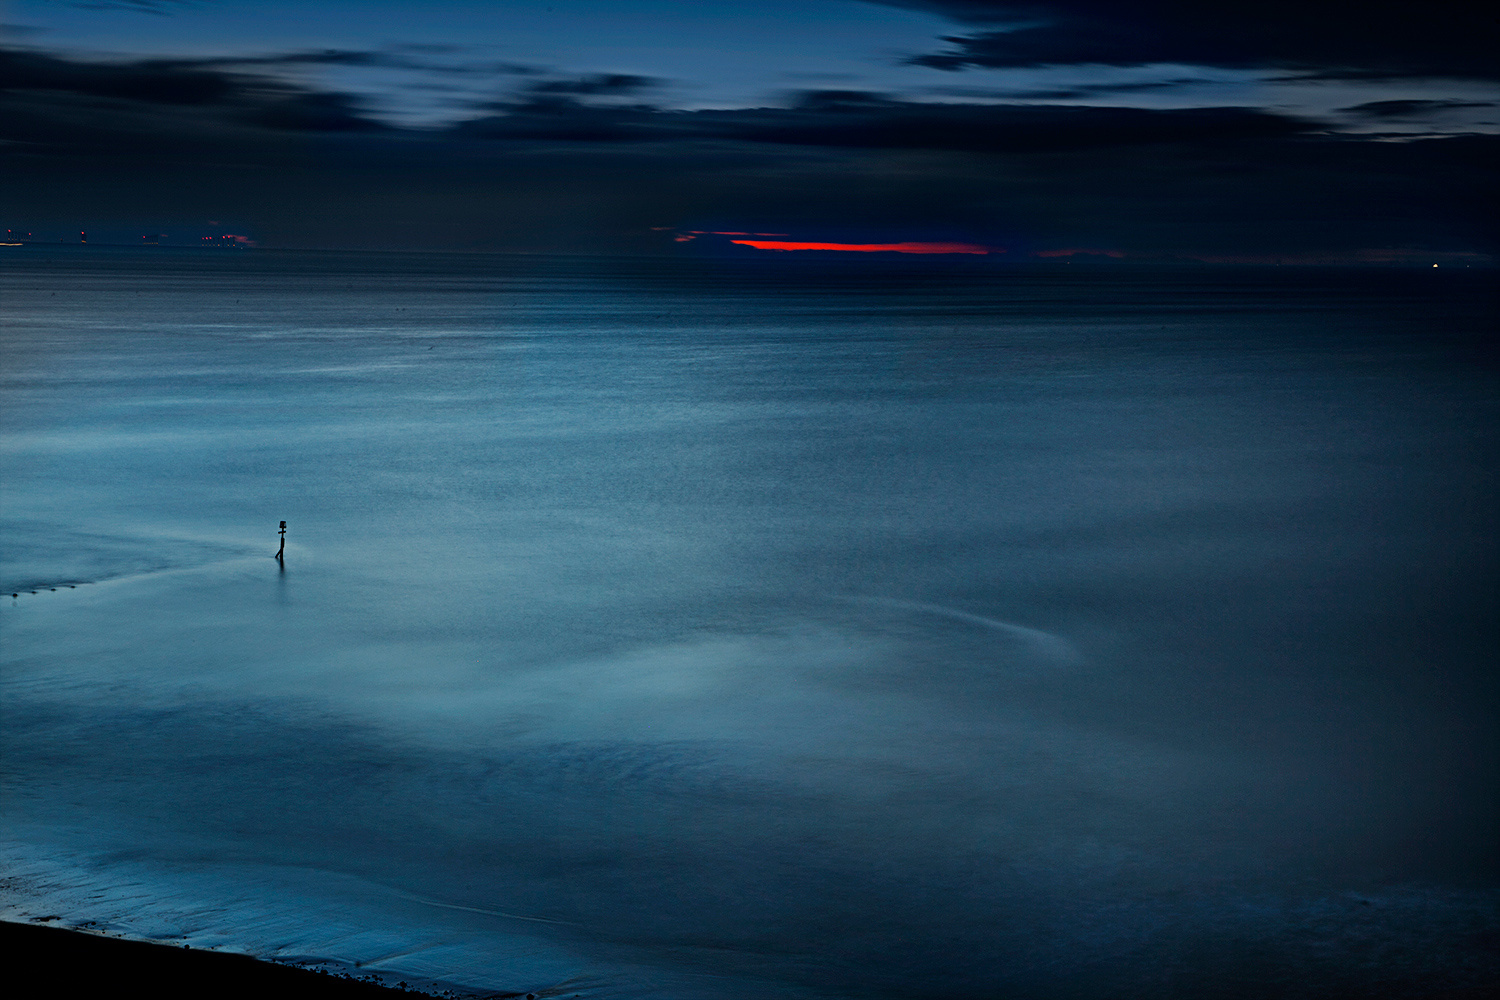 Nocturne: The Illuminated Sea by David Morris